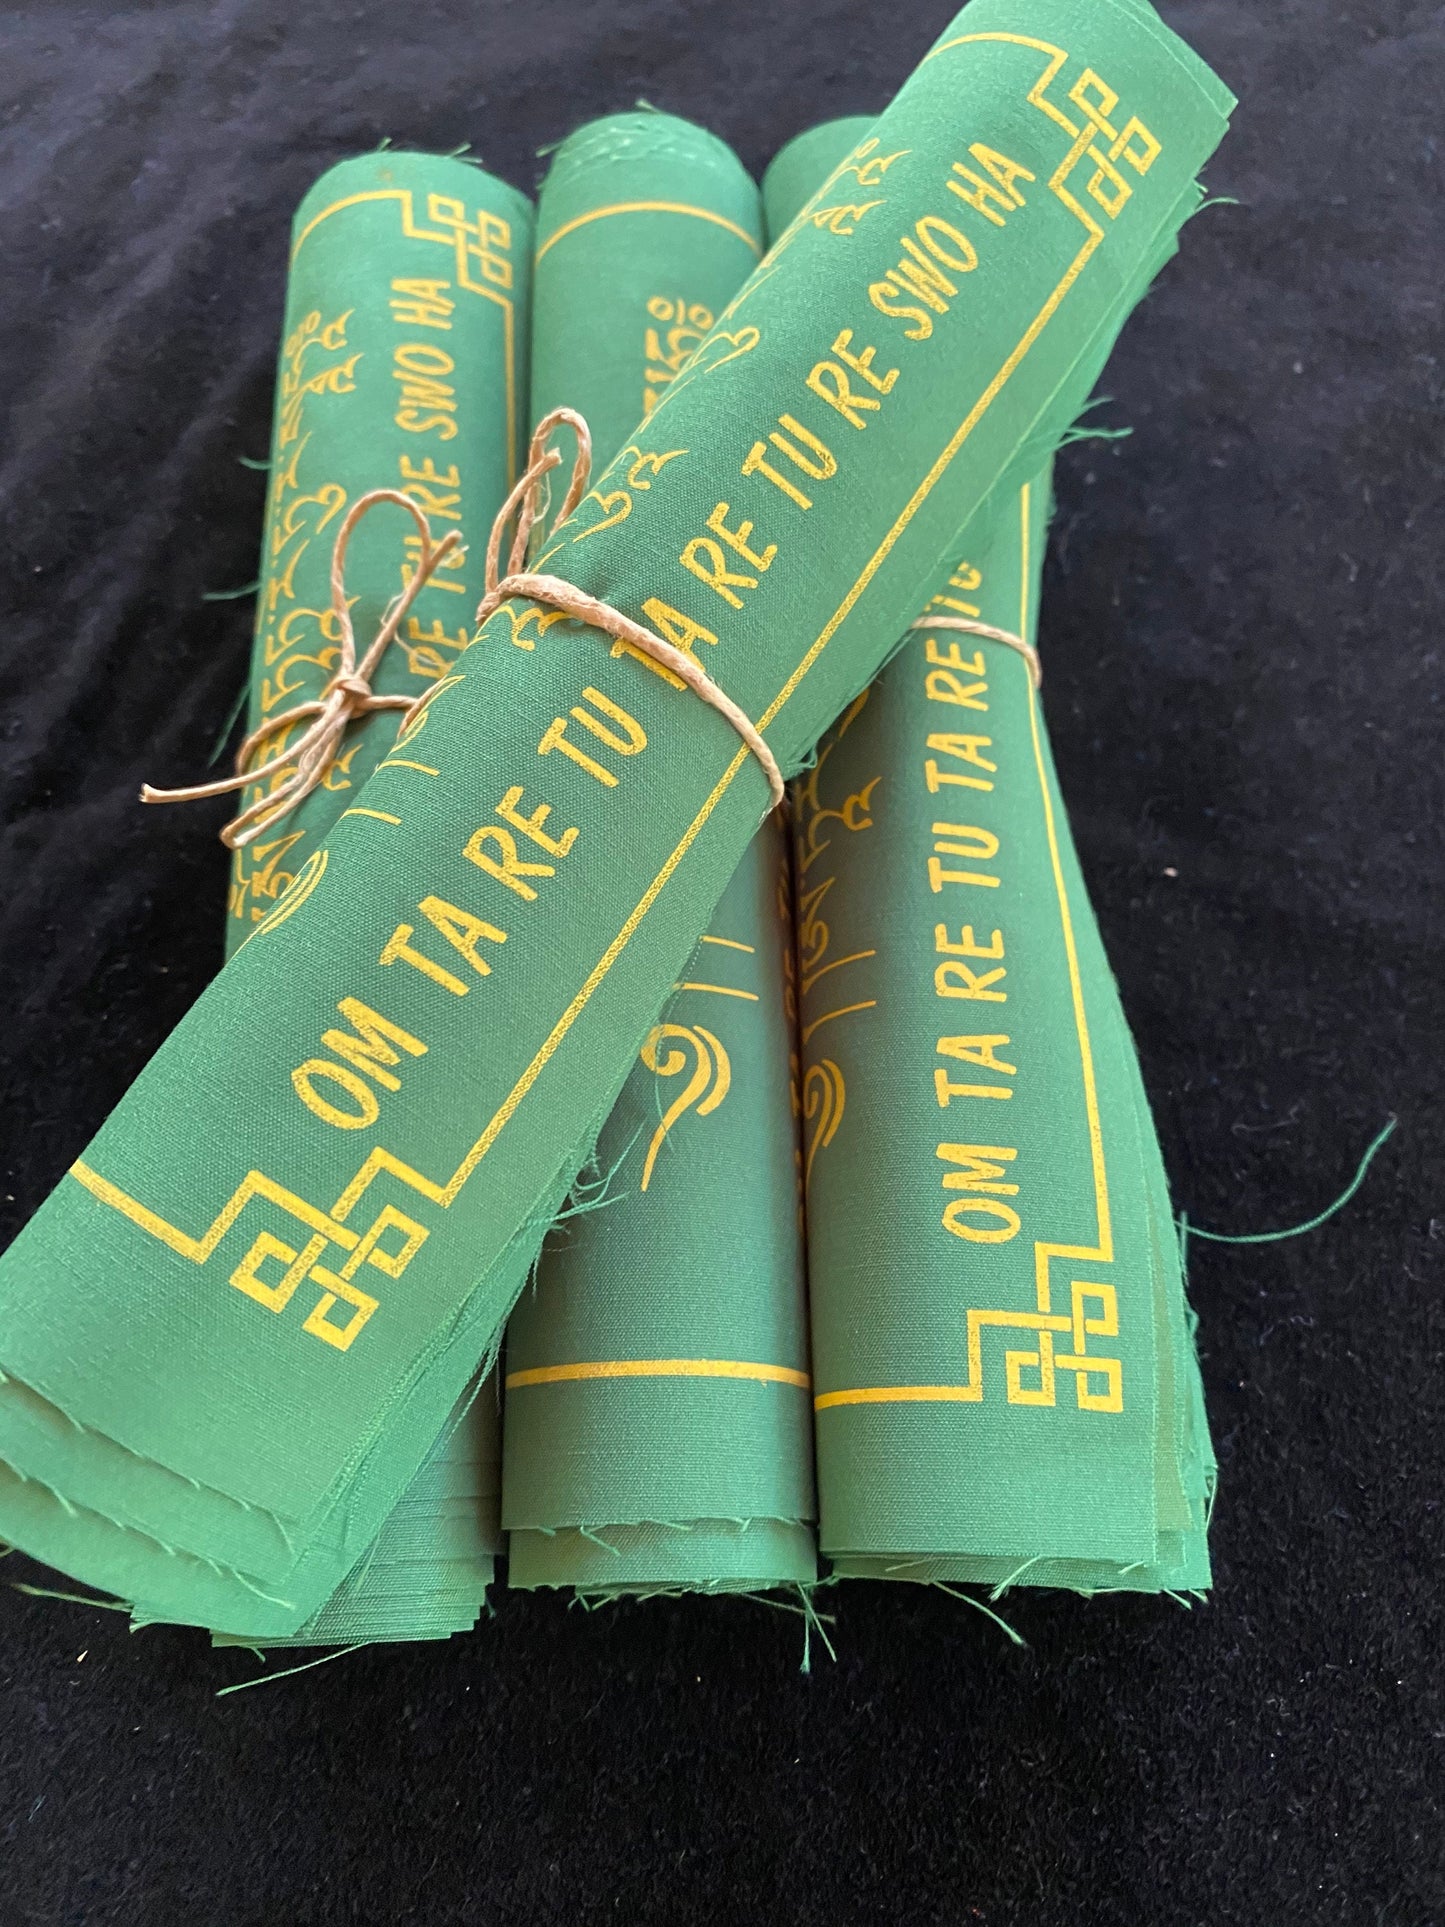 Green Tara prayer flags: 4 rolls of high-quality Tibetan flags, 10 flags/set, 8x8 in. each, green cloth with yellow Tara image.